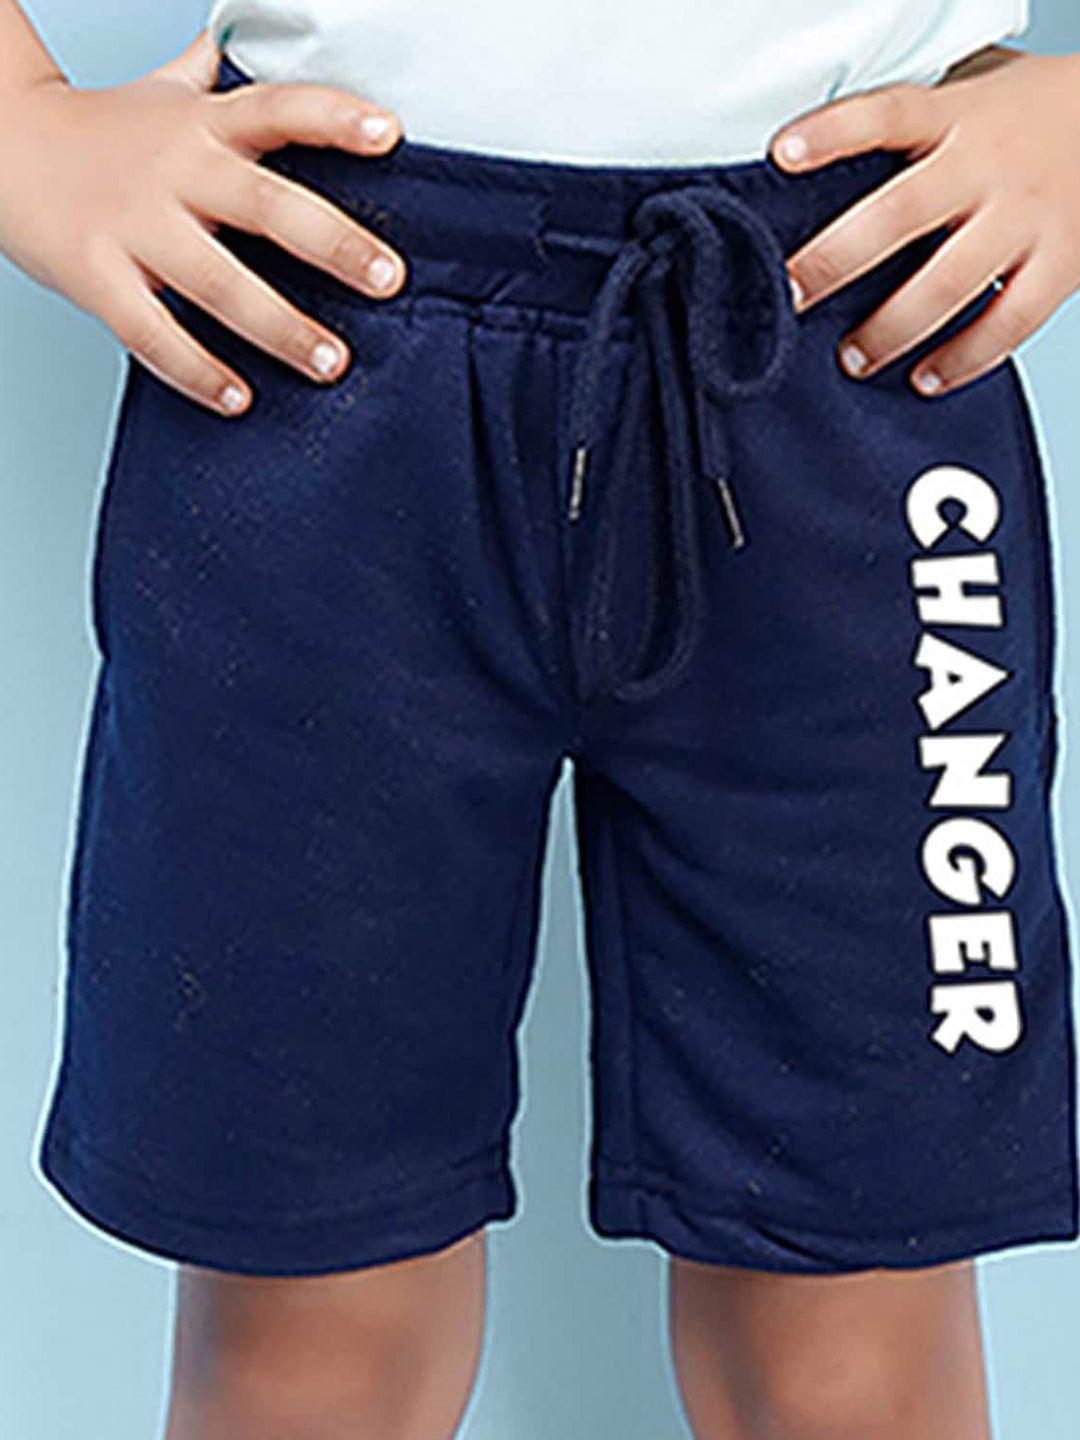 nusyl boys typography printed mid-rise shorts